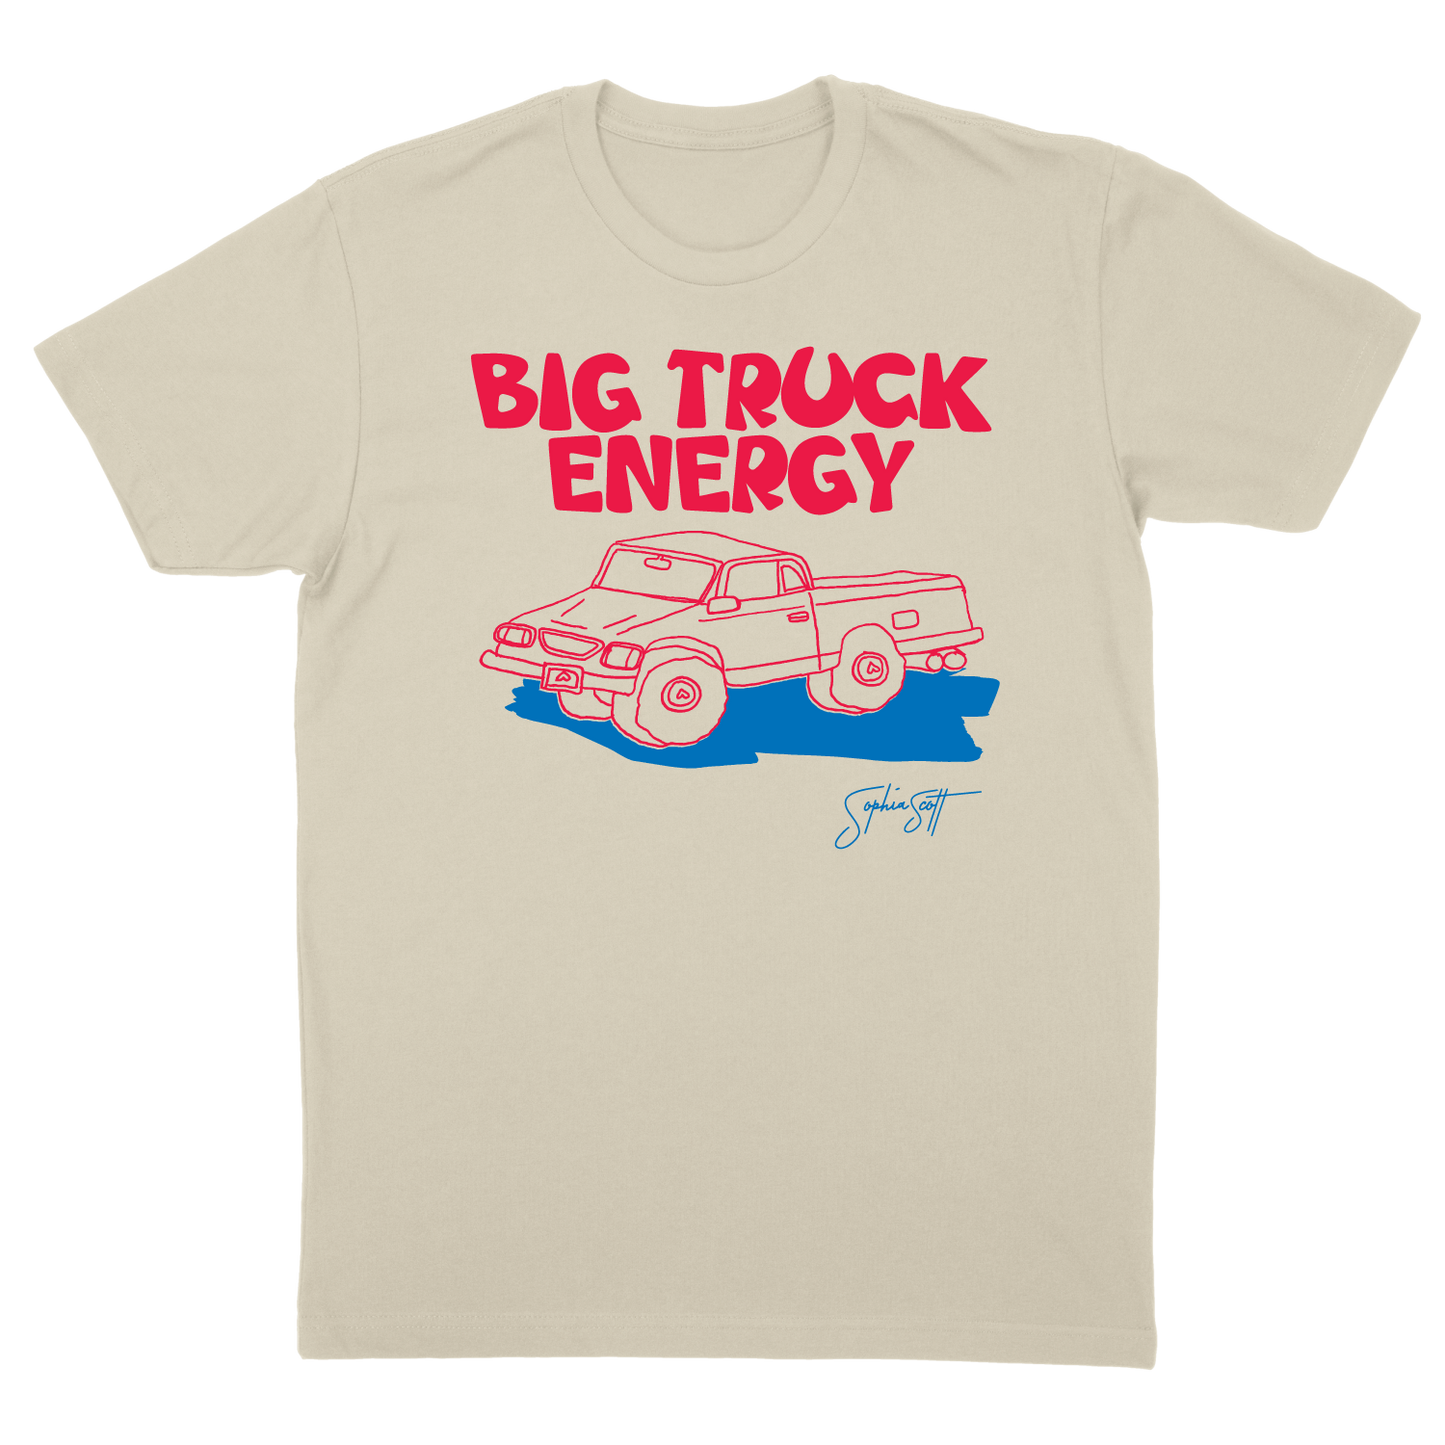 Sophia Scott - Big Truck Energy T-Shirt